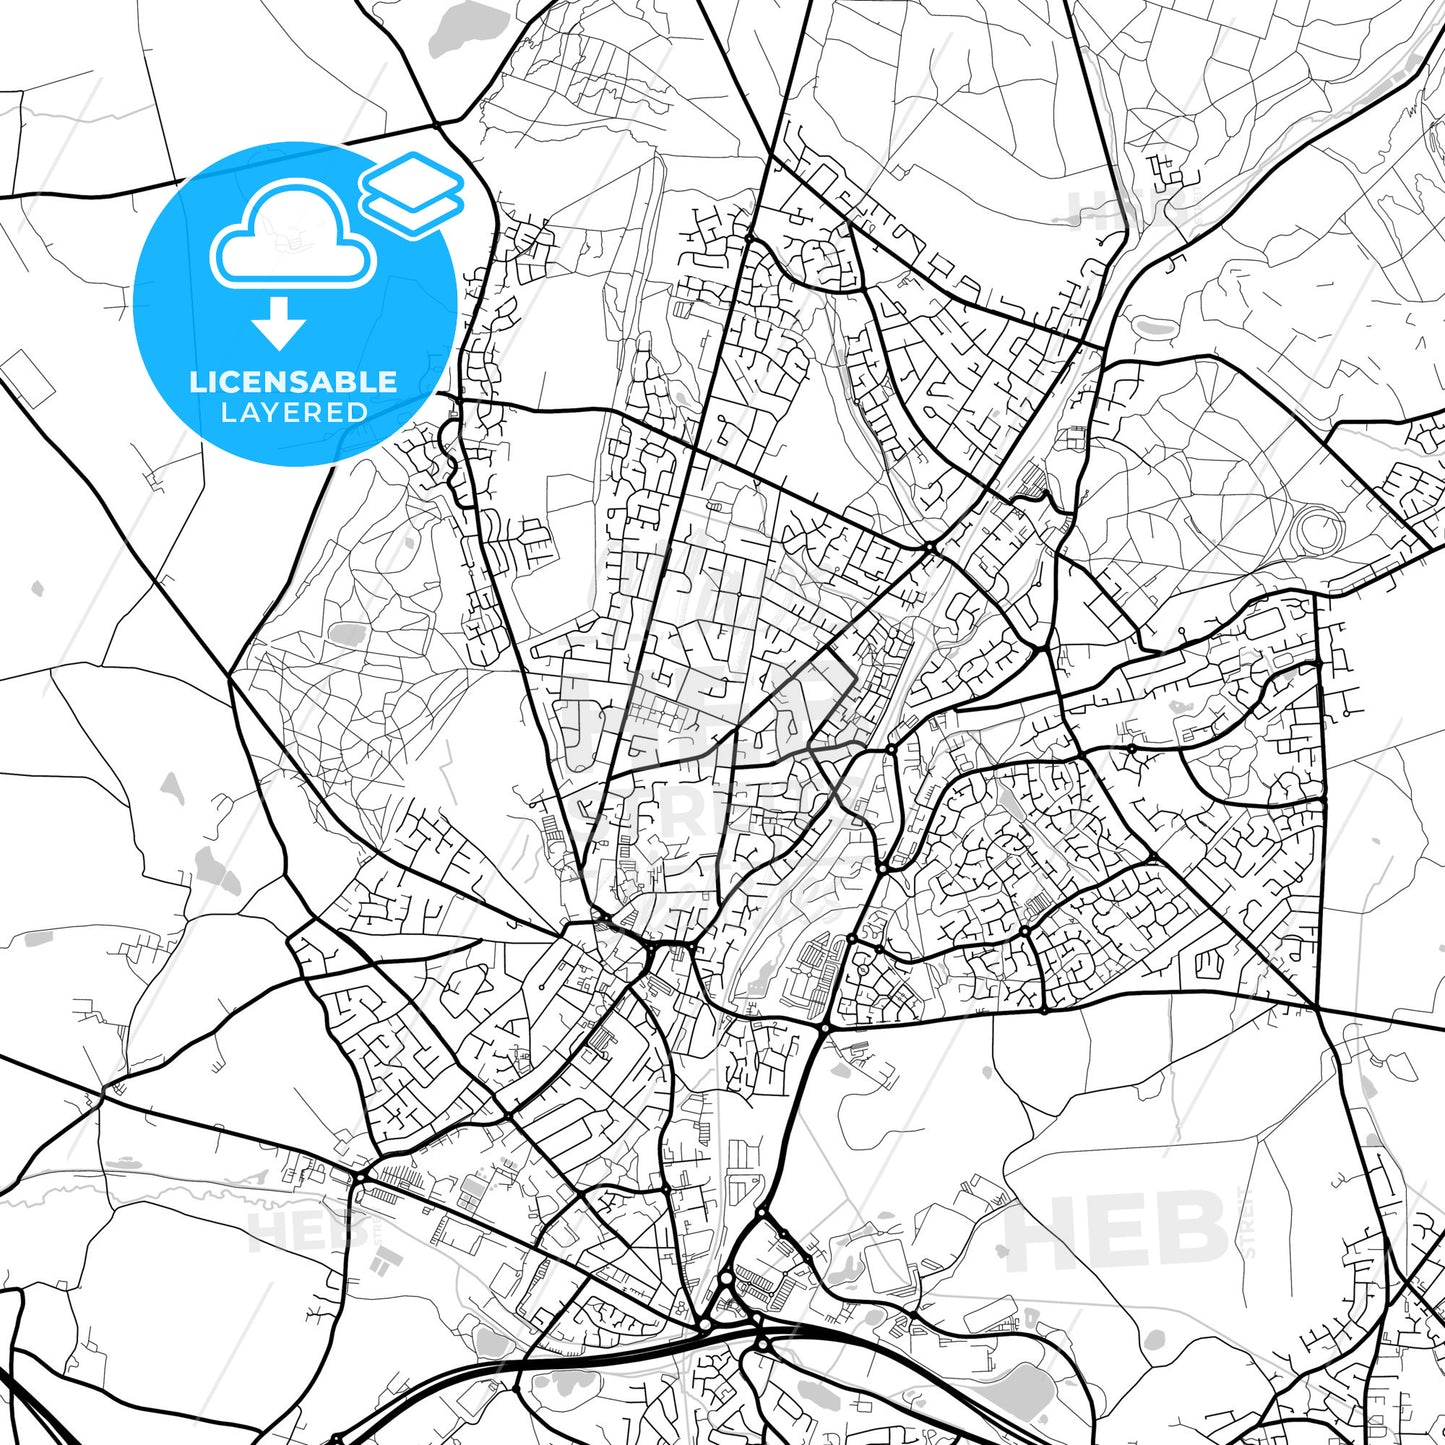 Layered PDF map of Cannock, West Midlands, England